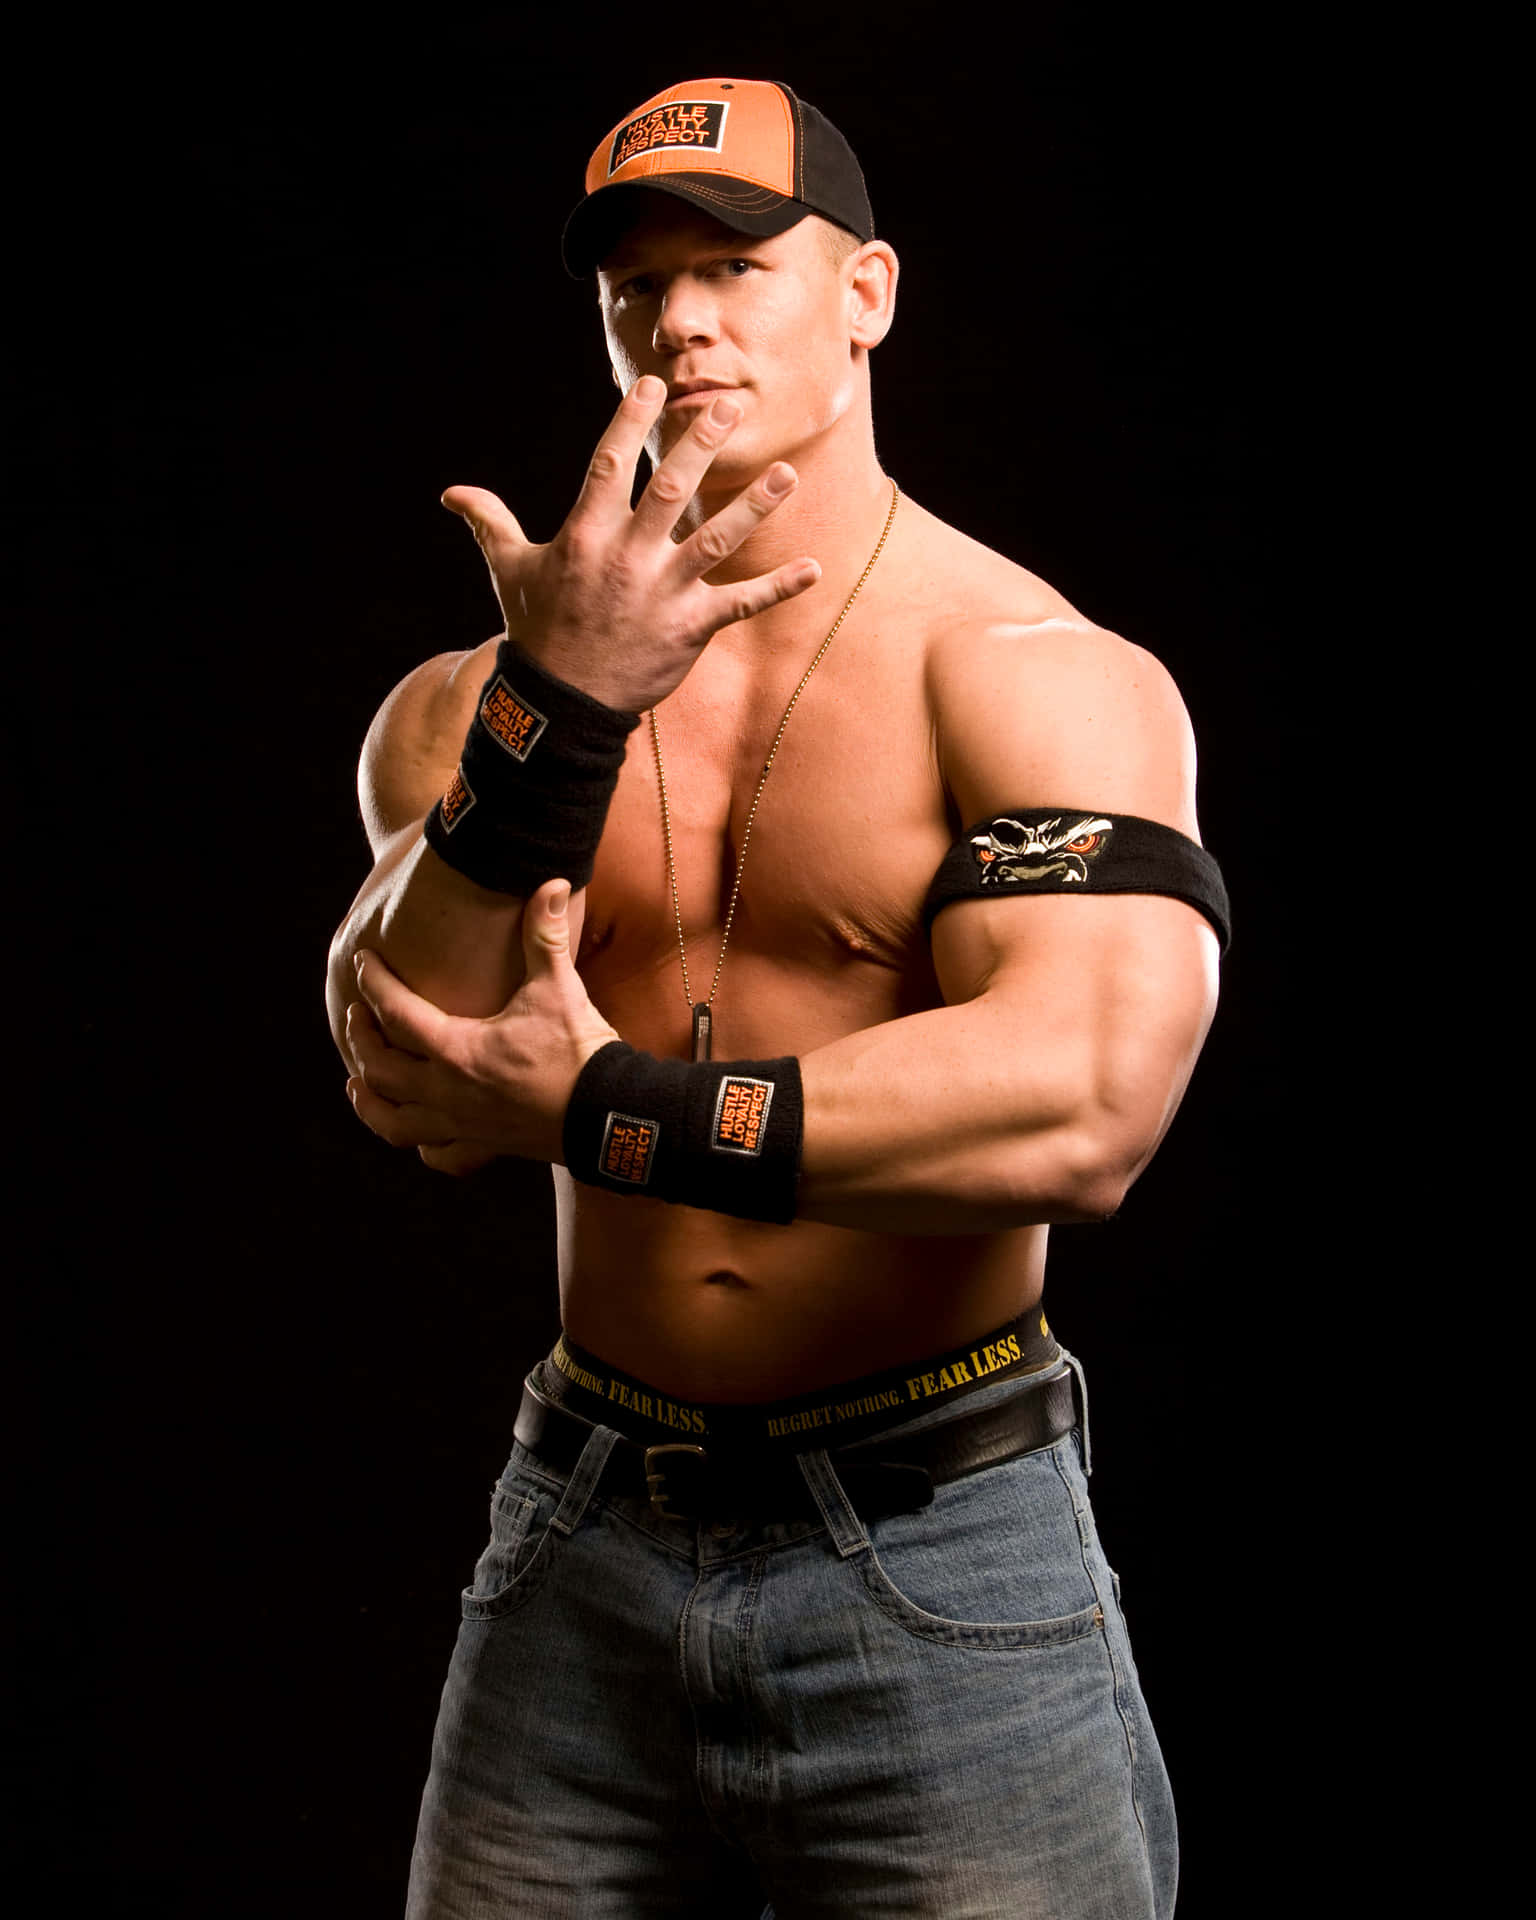 Download John Cena flexing muscles during a WWE match | Wallpapers.com